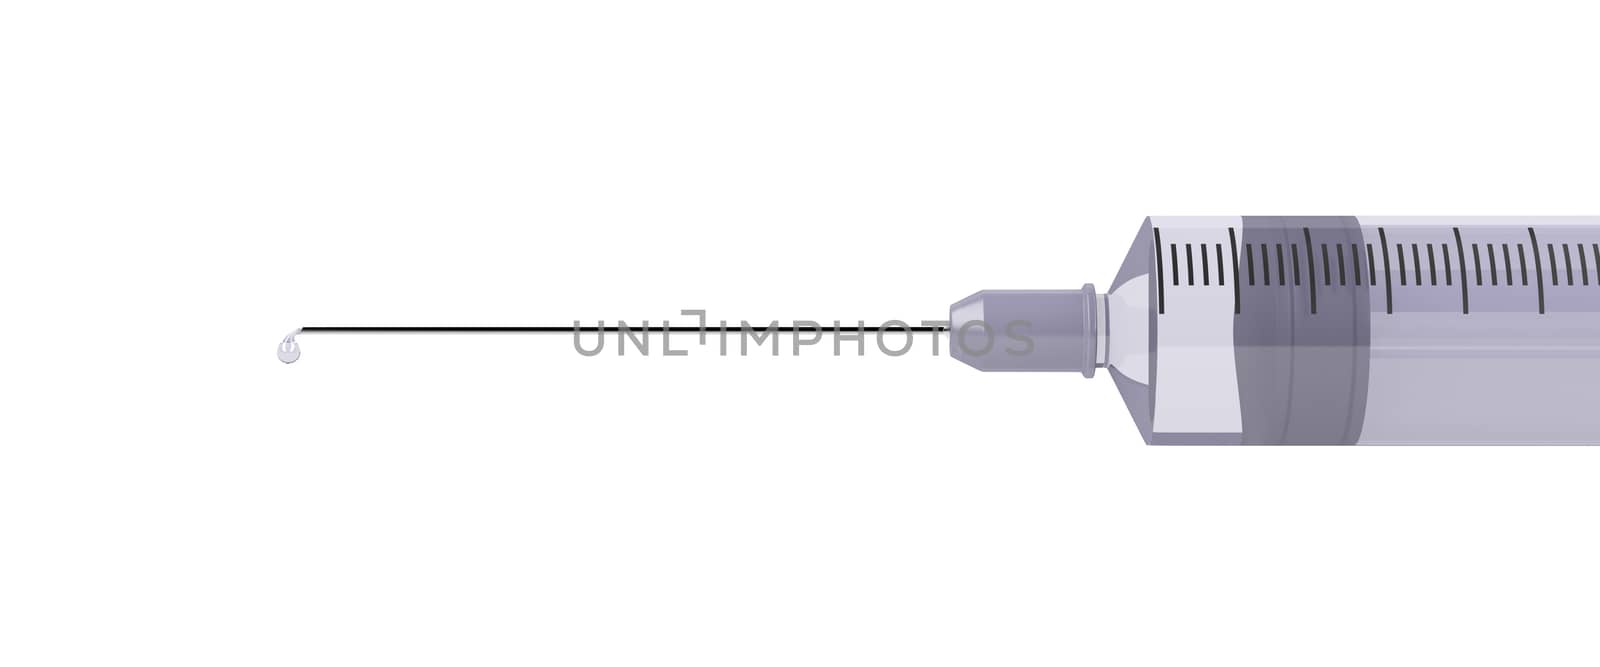 Medical syringe with drop on the needle, isolated on white 